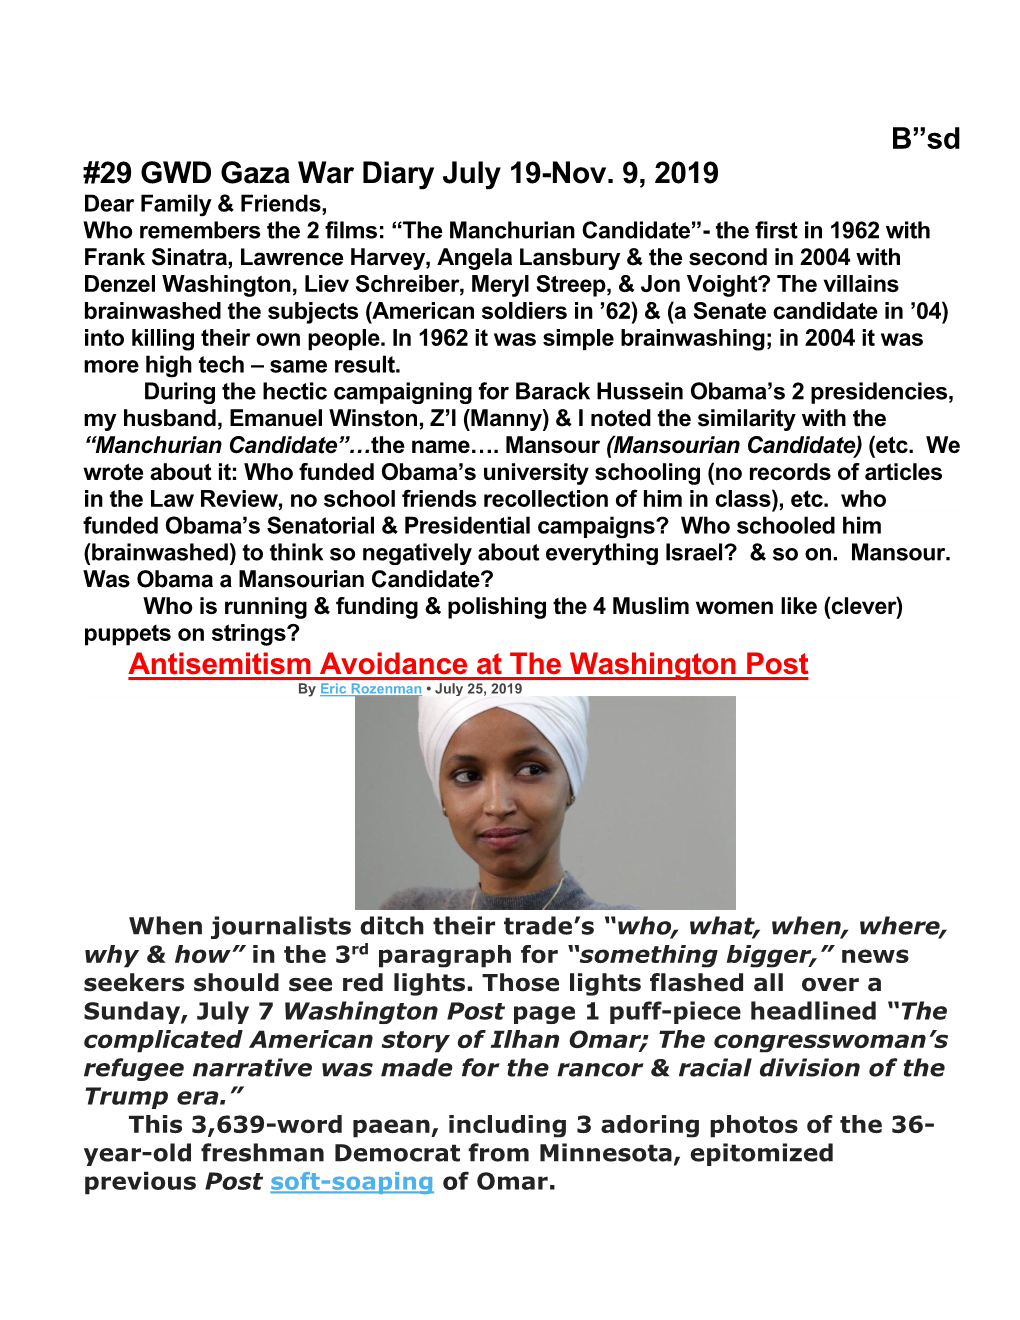 B”Sd #29 GWD Gaza War Diary July 19-Nov. 9, 2019 Antisemitism